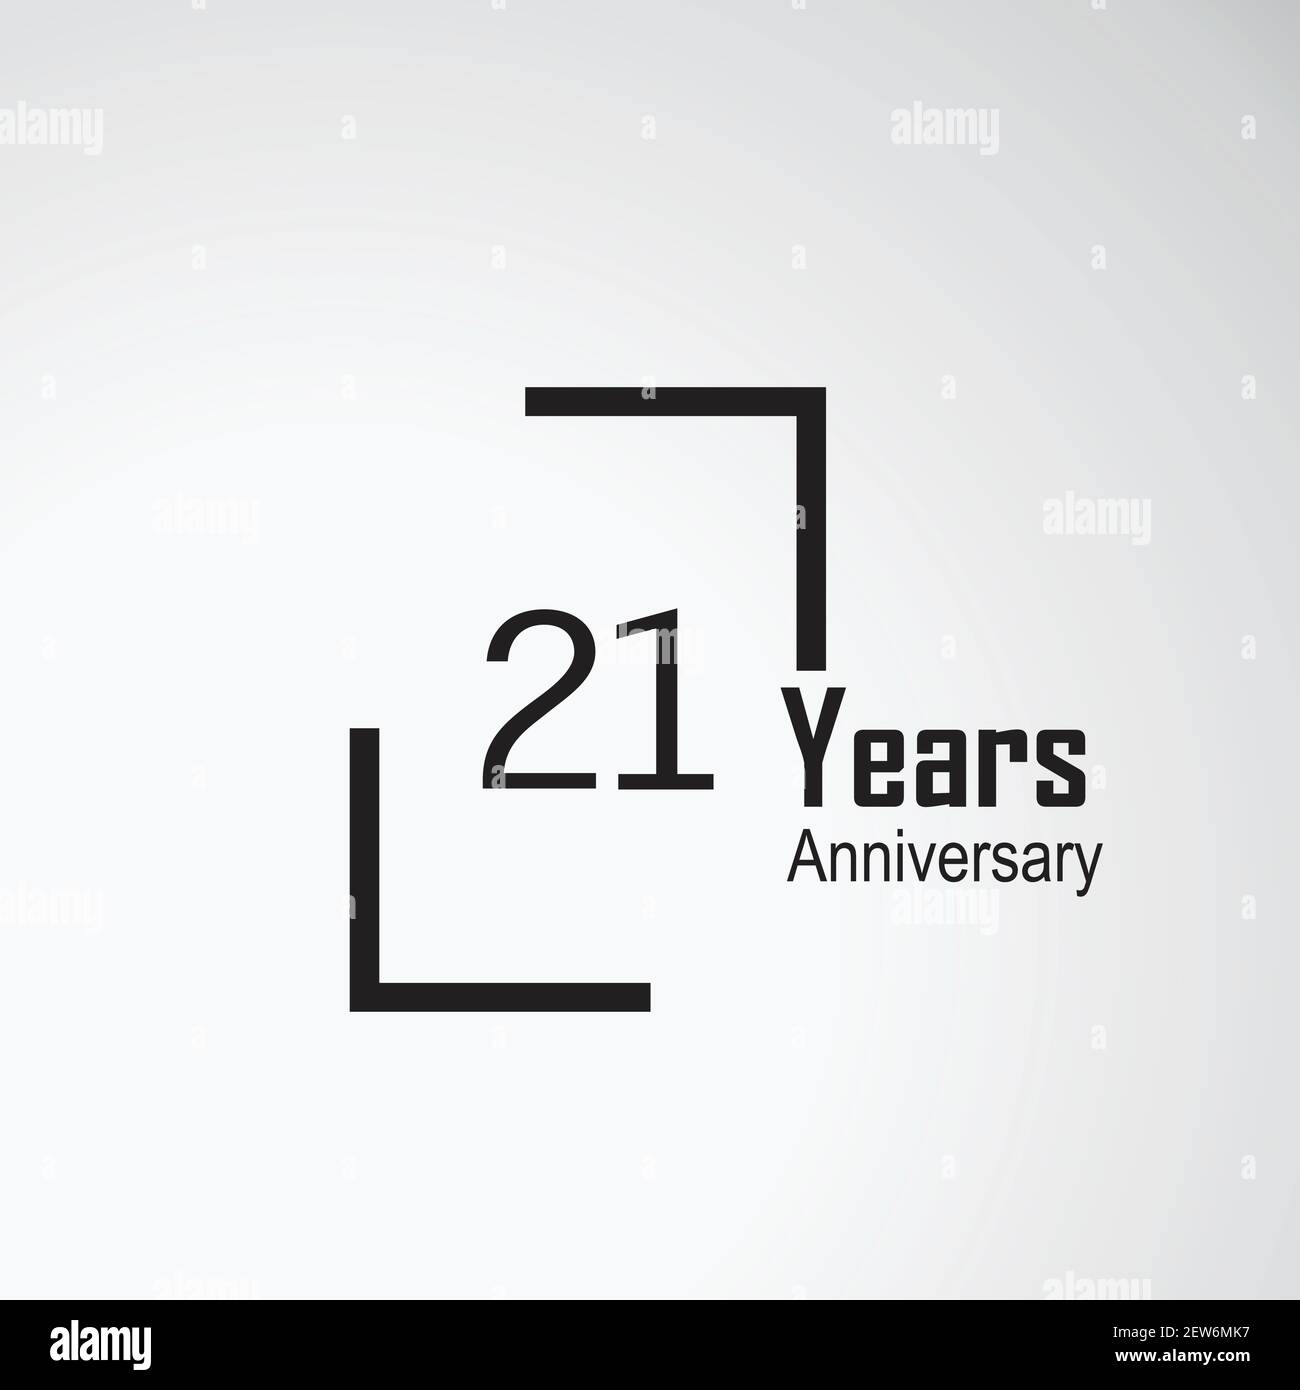 21 Year Anniversary Vector Template Design Illustration box Stock Vector